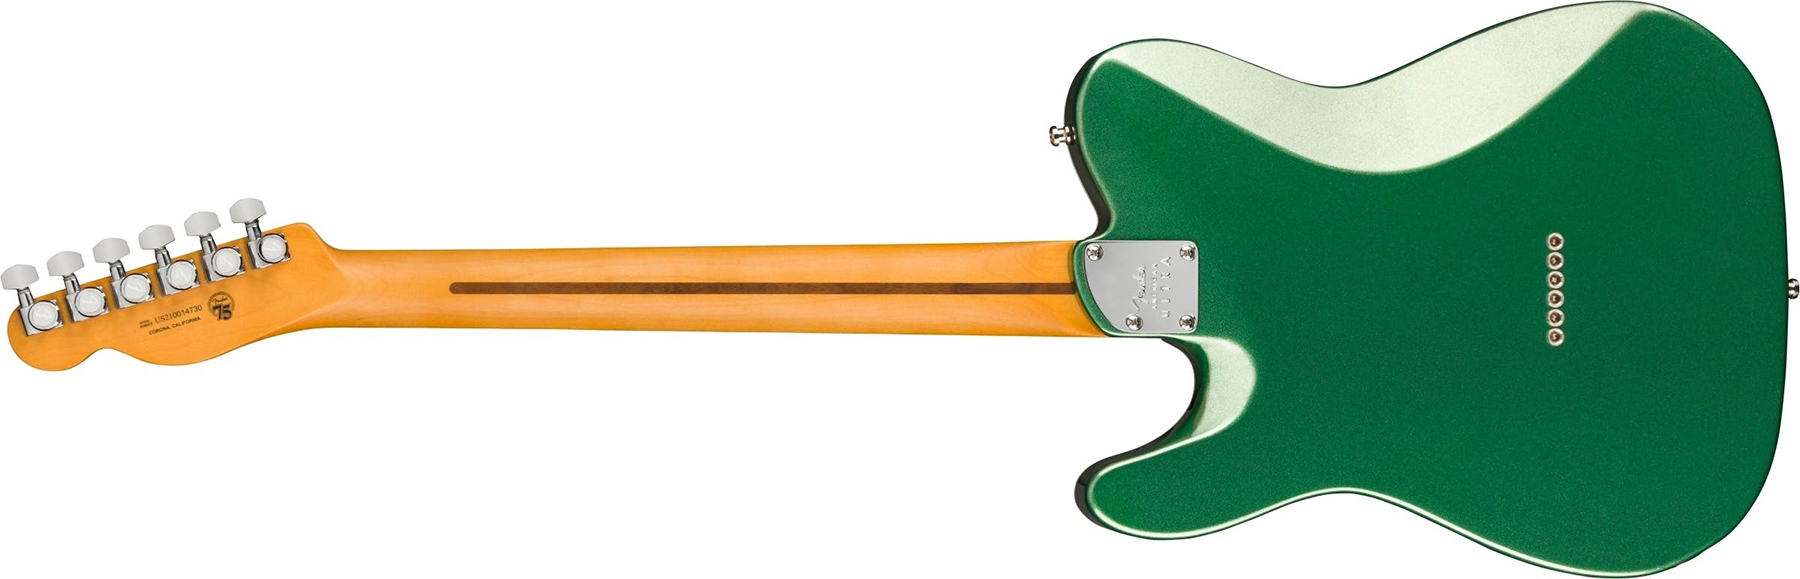 Fender Tele American Ultra Fsr Ltd Usa 2s Ht Eb - Mystic Pine Green - Televorm elektrische gitaar - Variation 1